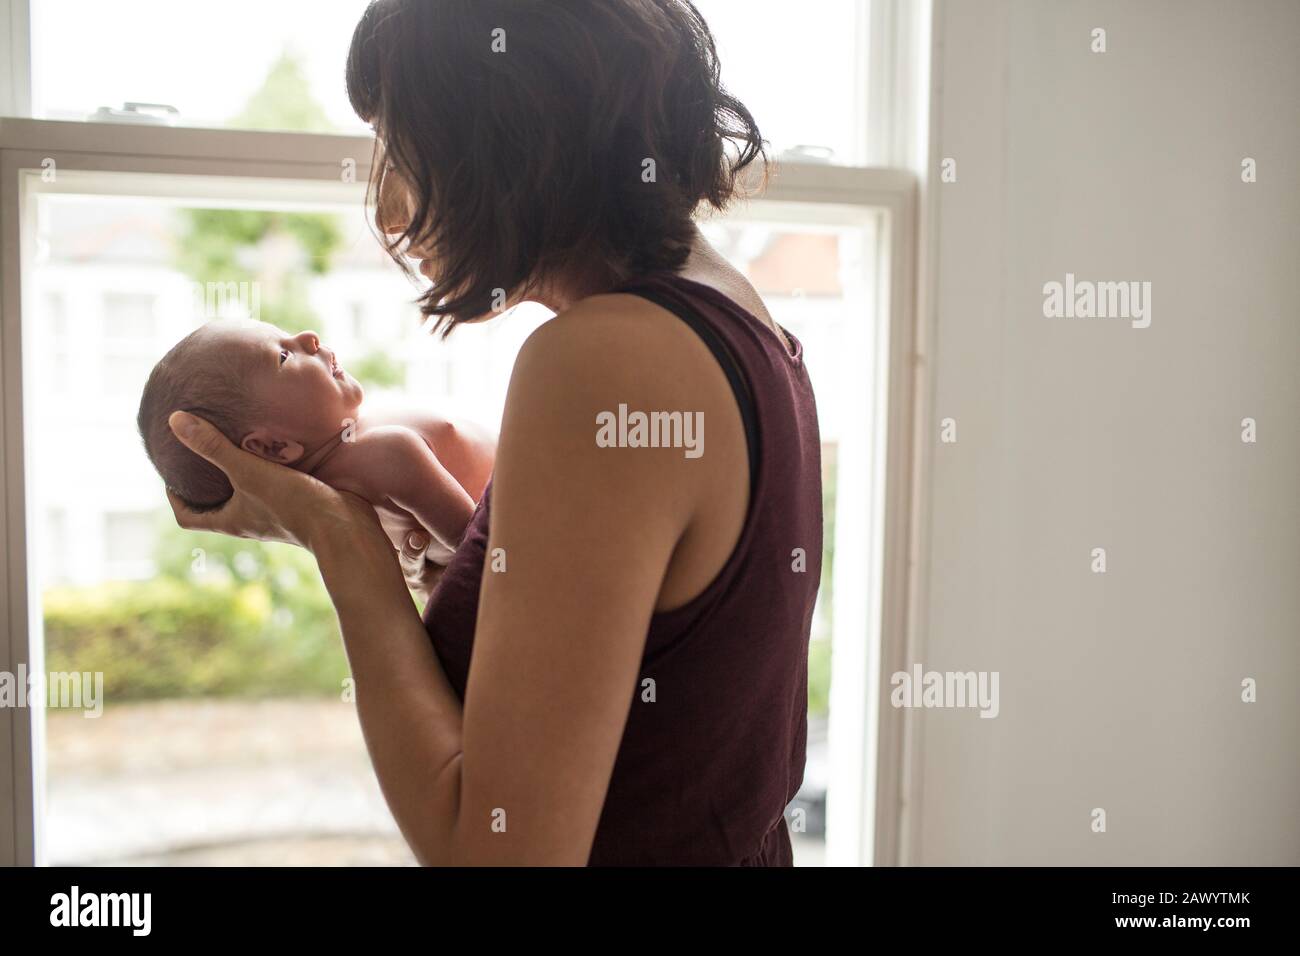 Mother cradling newborn baby son at window Stock Photo